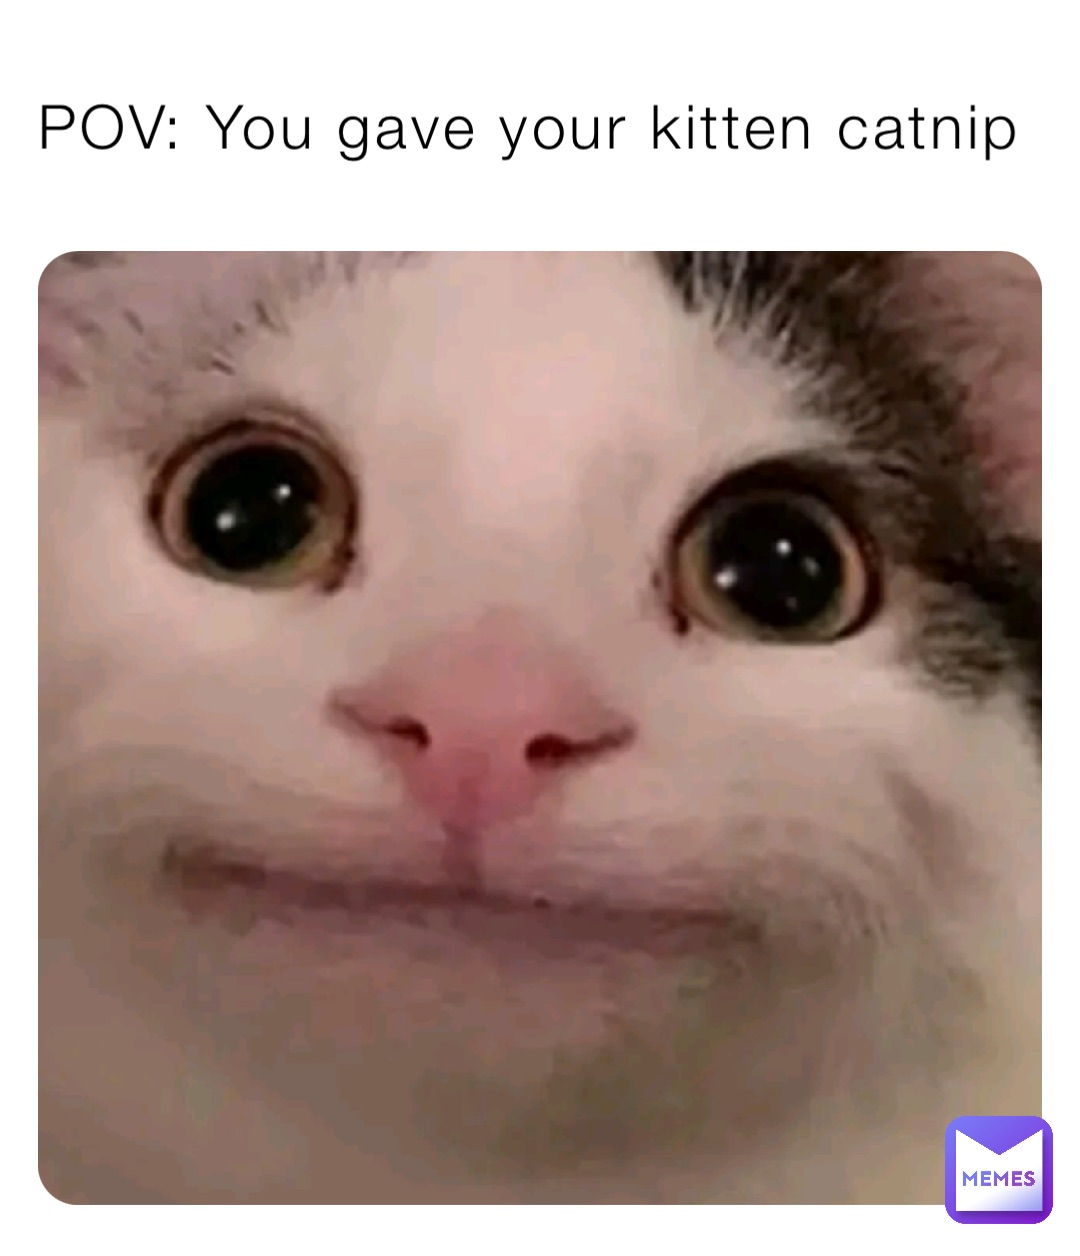 POV: You gave your kitten catnip